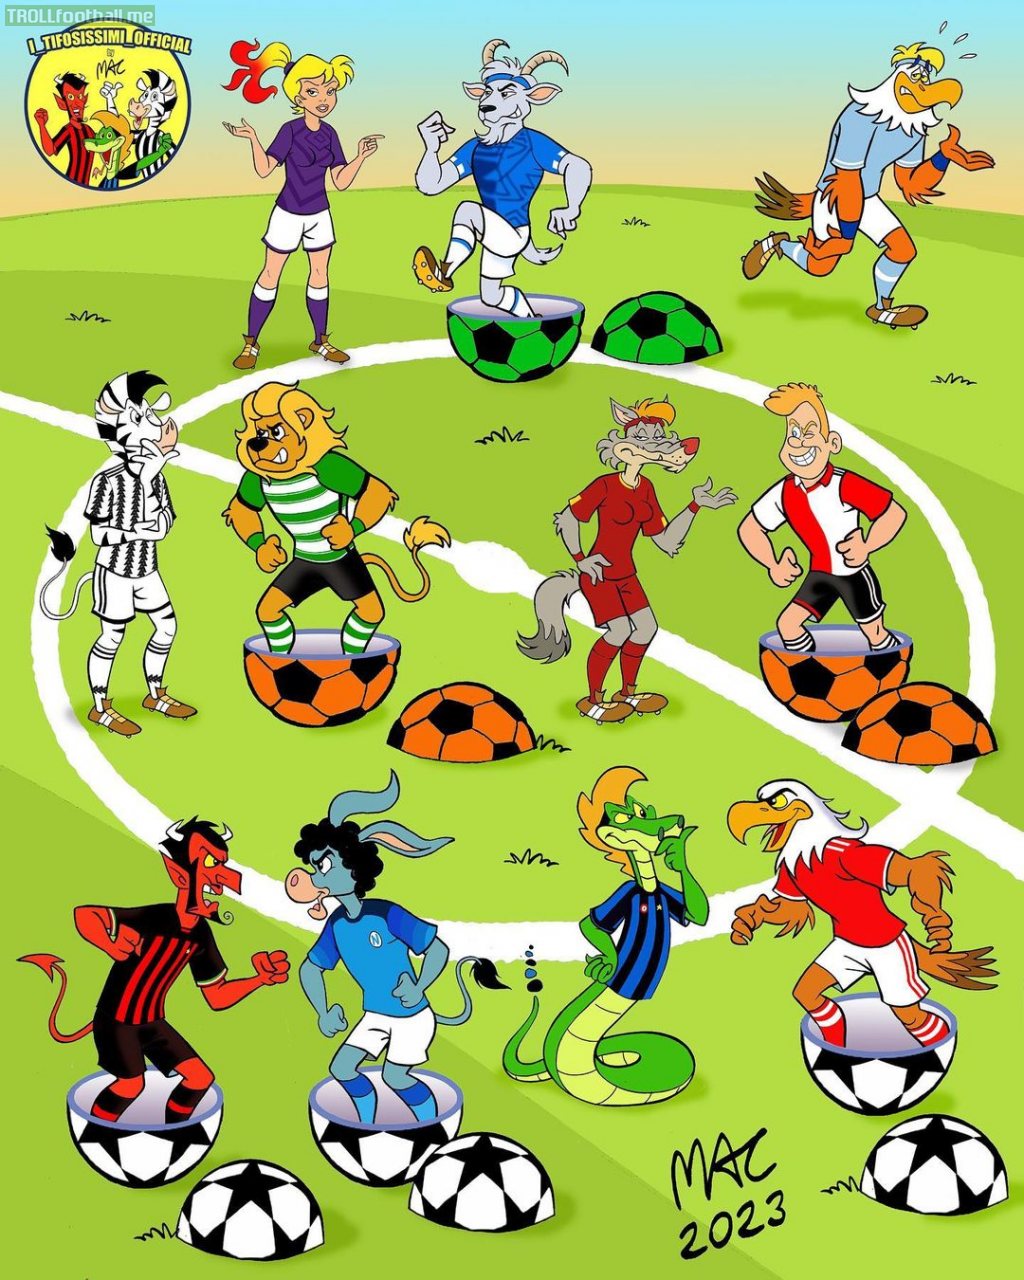 Gazzetta Illustration on European fixtures of Serie A teams